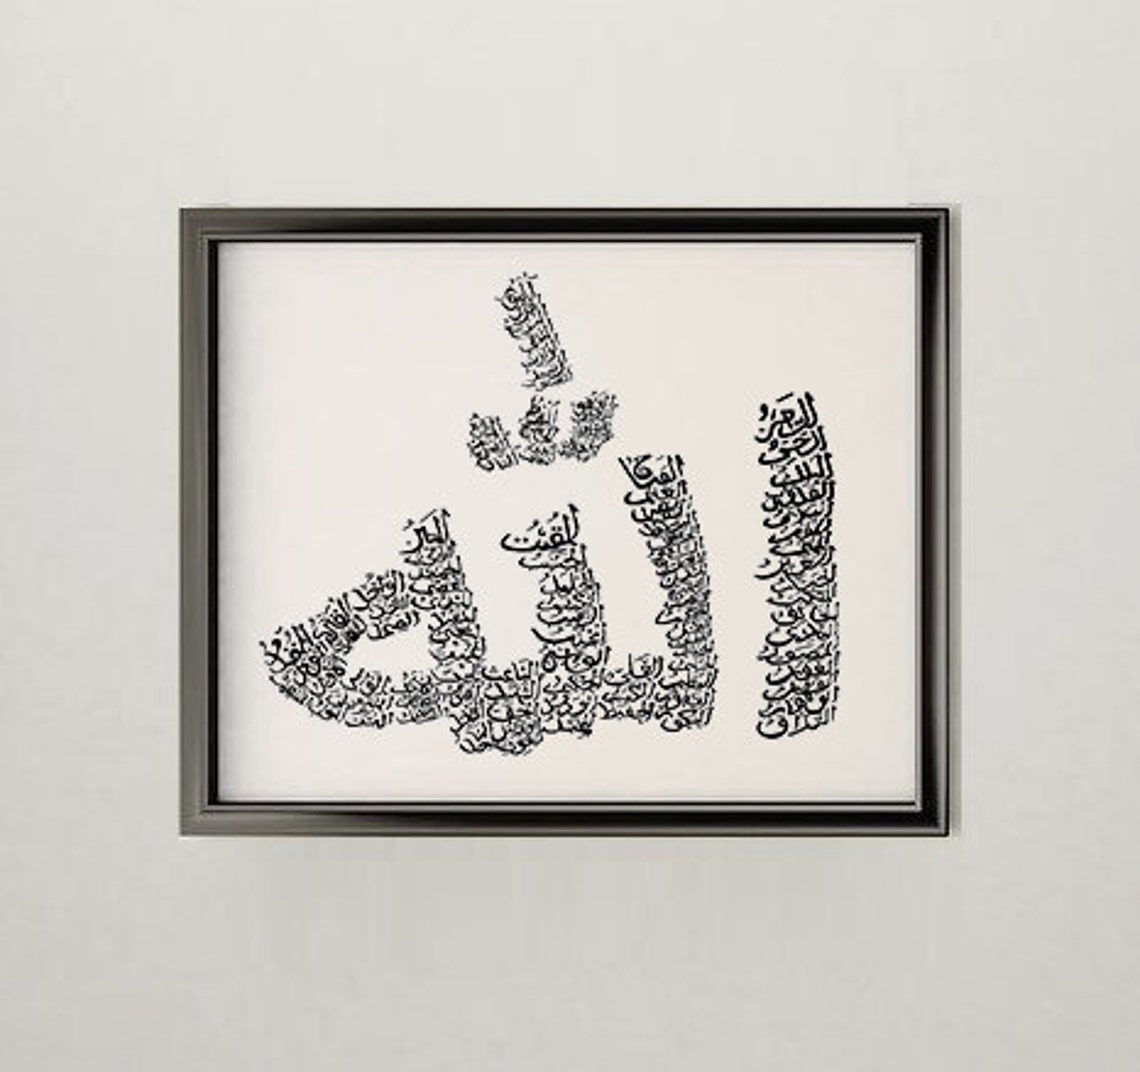 99 Names Of Allah Arabic Calligraphy Art Print Wall Decor Etsy